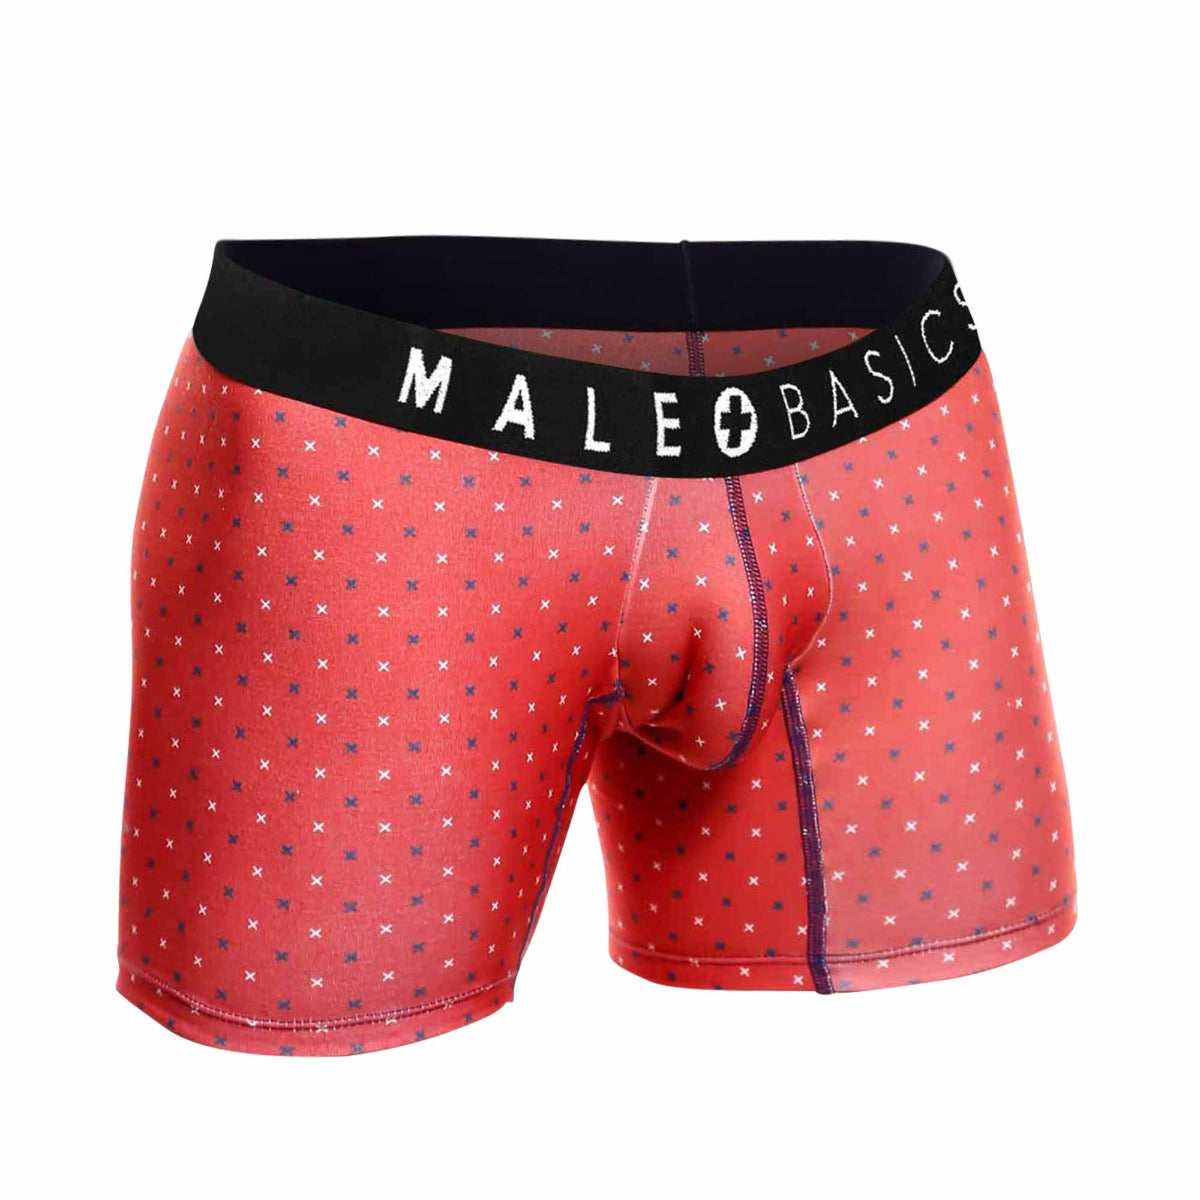 MaleBasics Nuevo Boxer Medio Timon- Paquete x 3